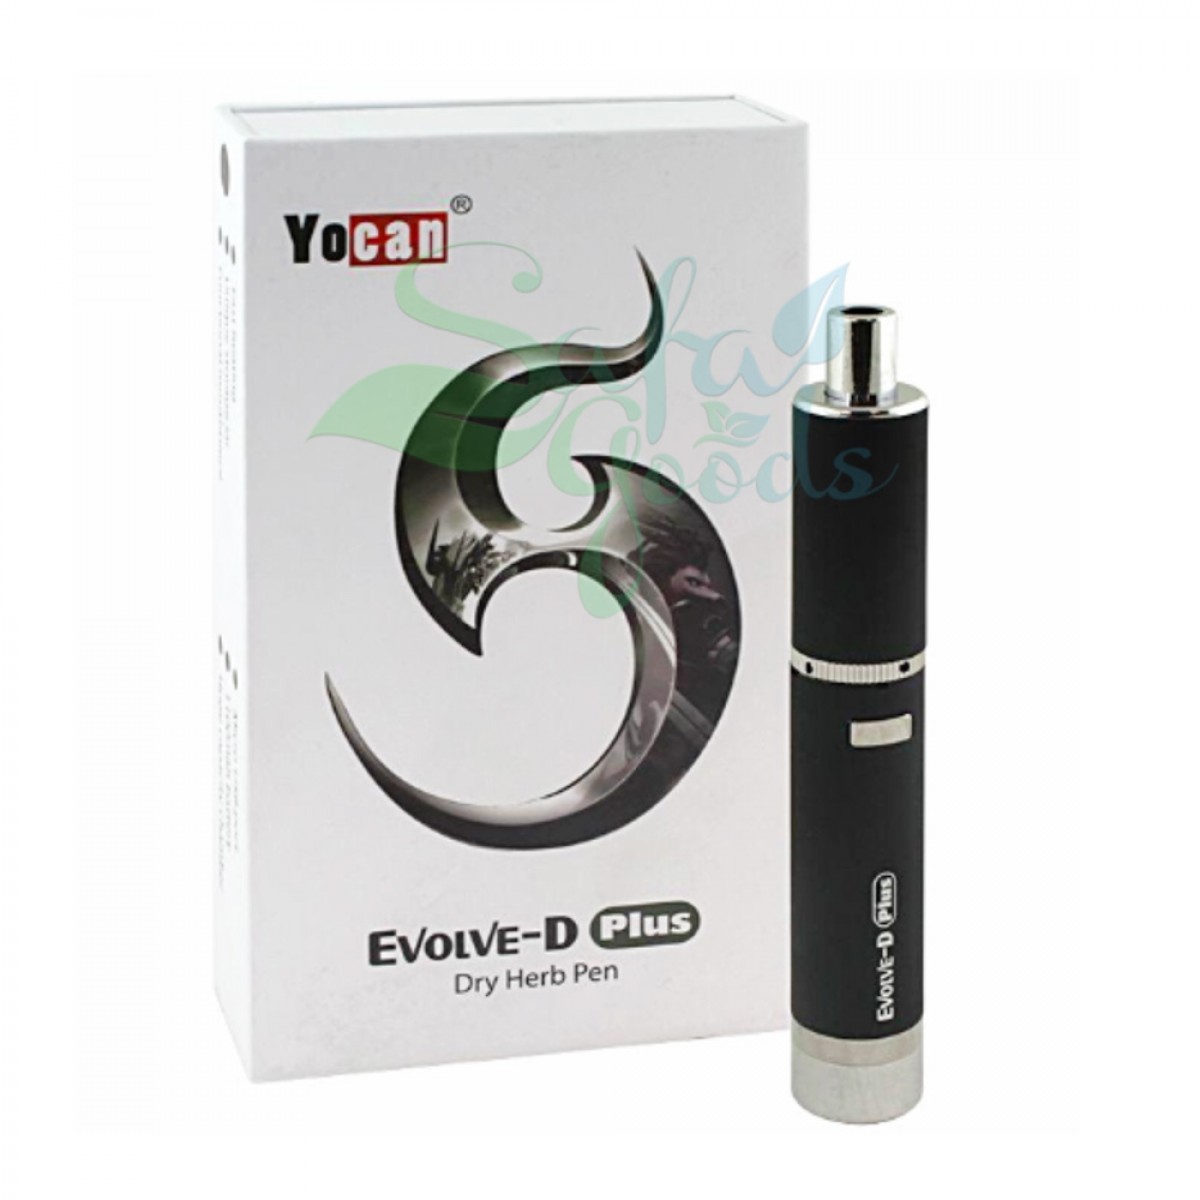 Yocan Evolve-D Plus Dry Herb Kit